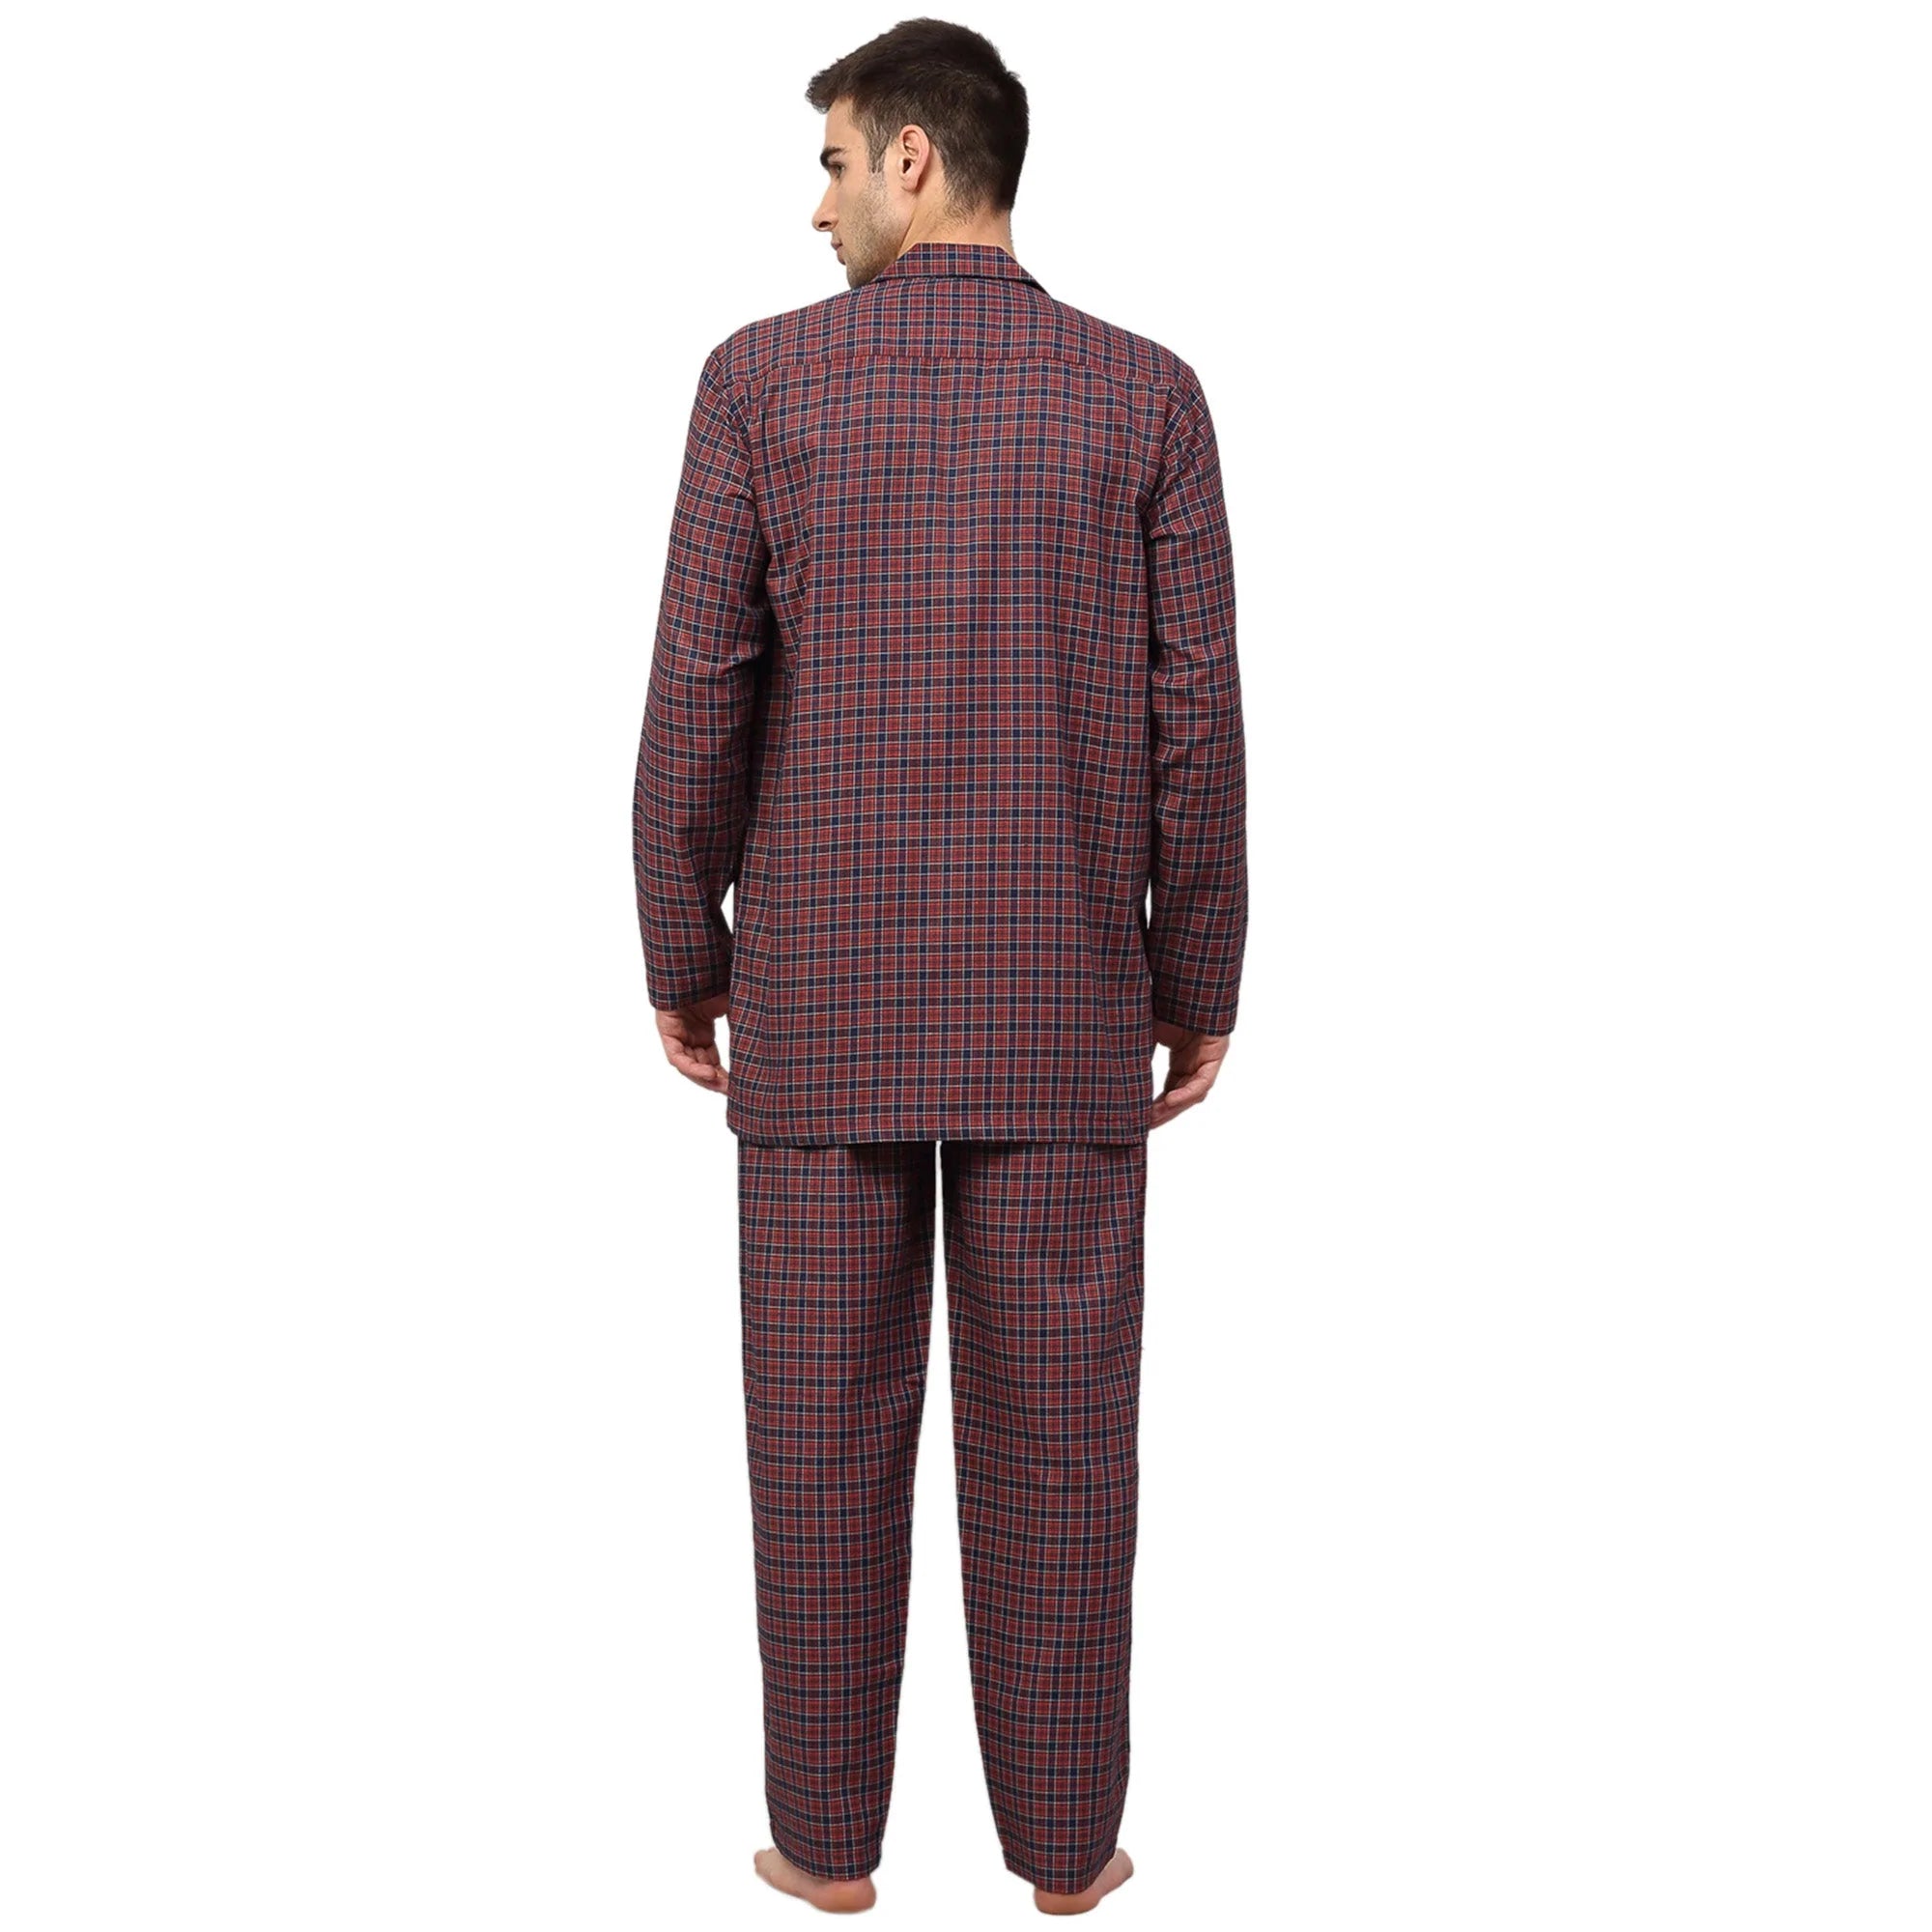 Jainish Men's Maroon Checked Night Suits ( GNS 001Maroon )